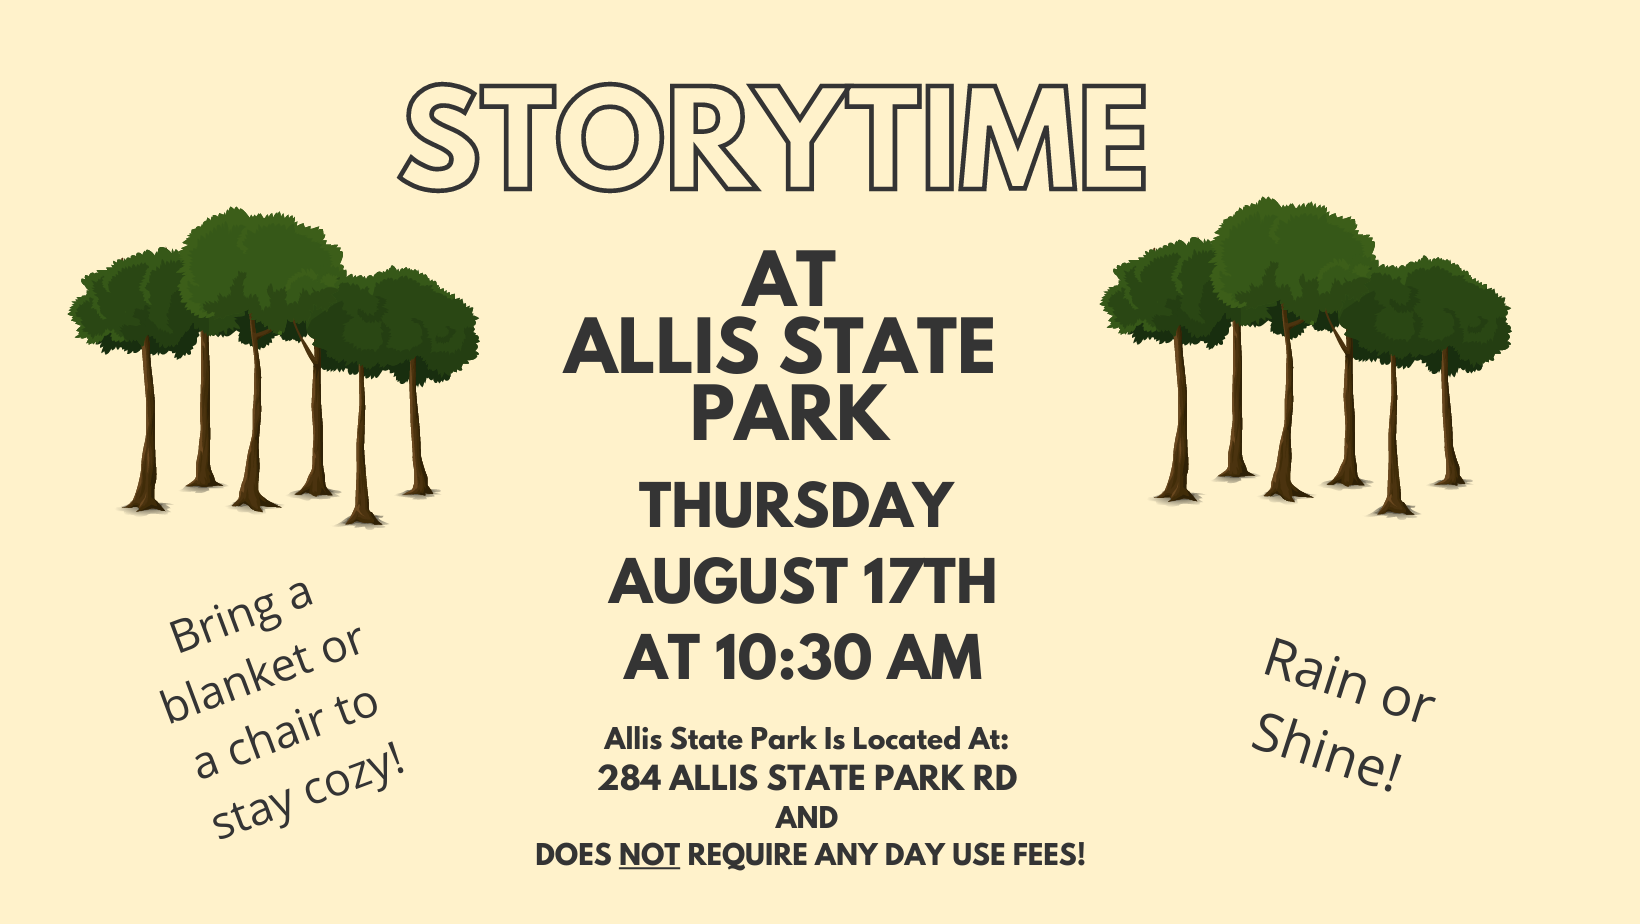 Storytime at Allis State Park